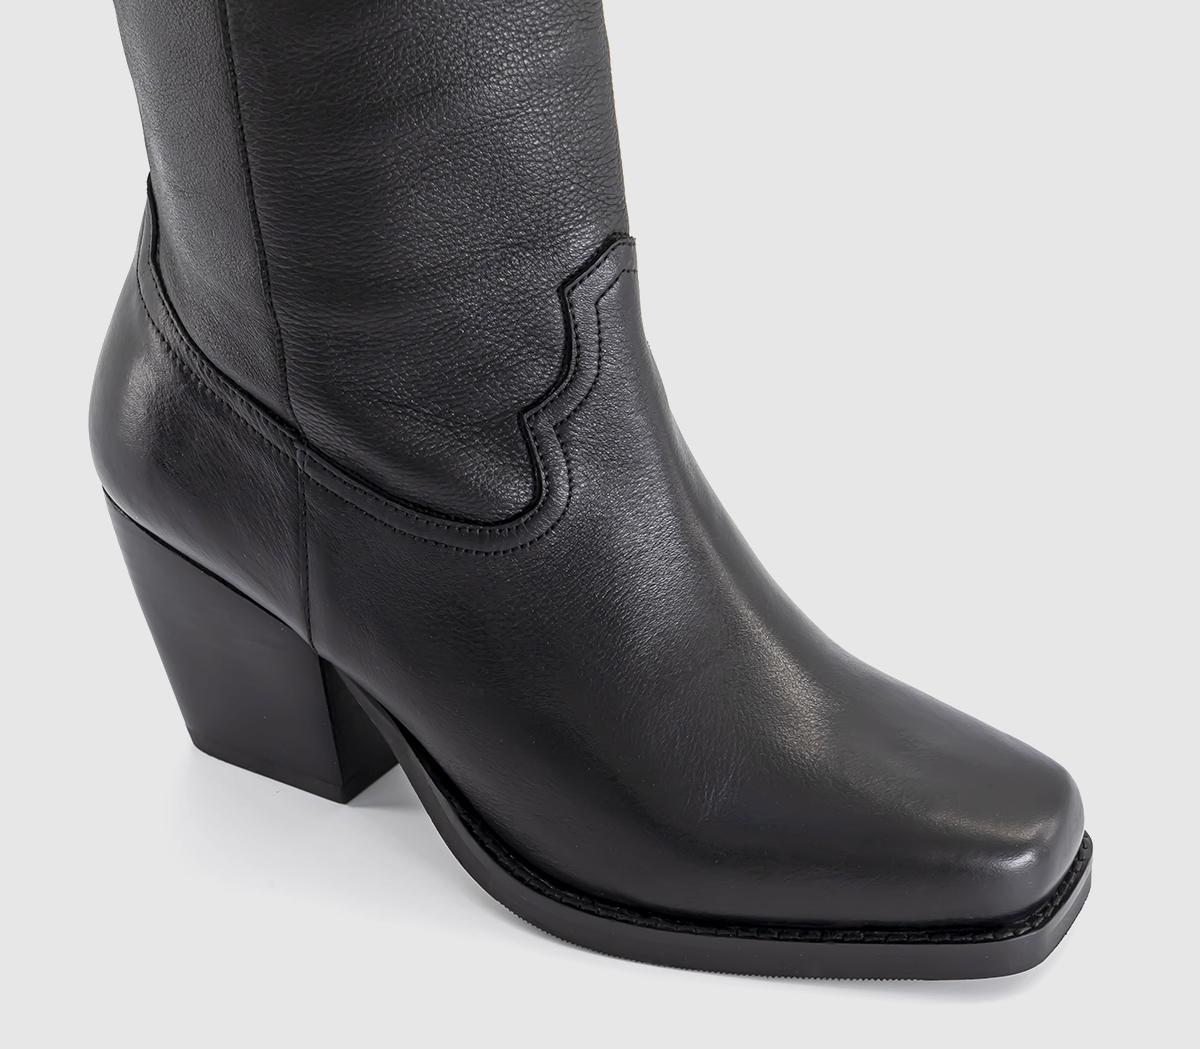 BRONX Classic Western Boots Black - Women's Boots